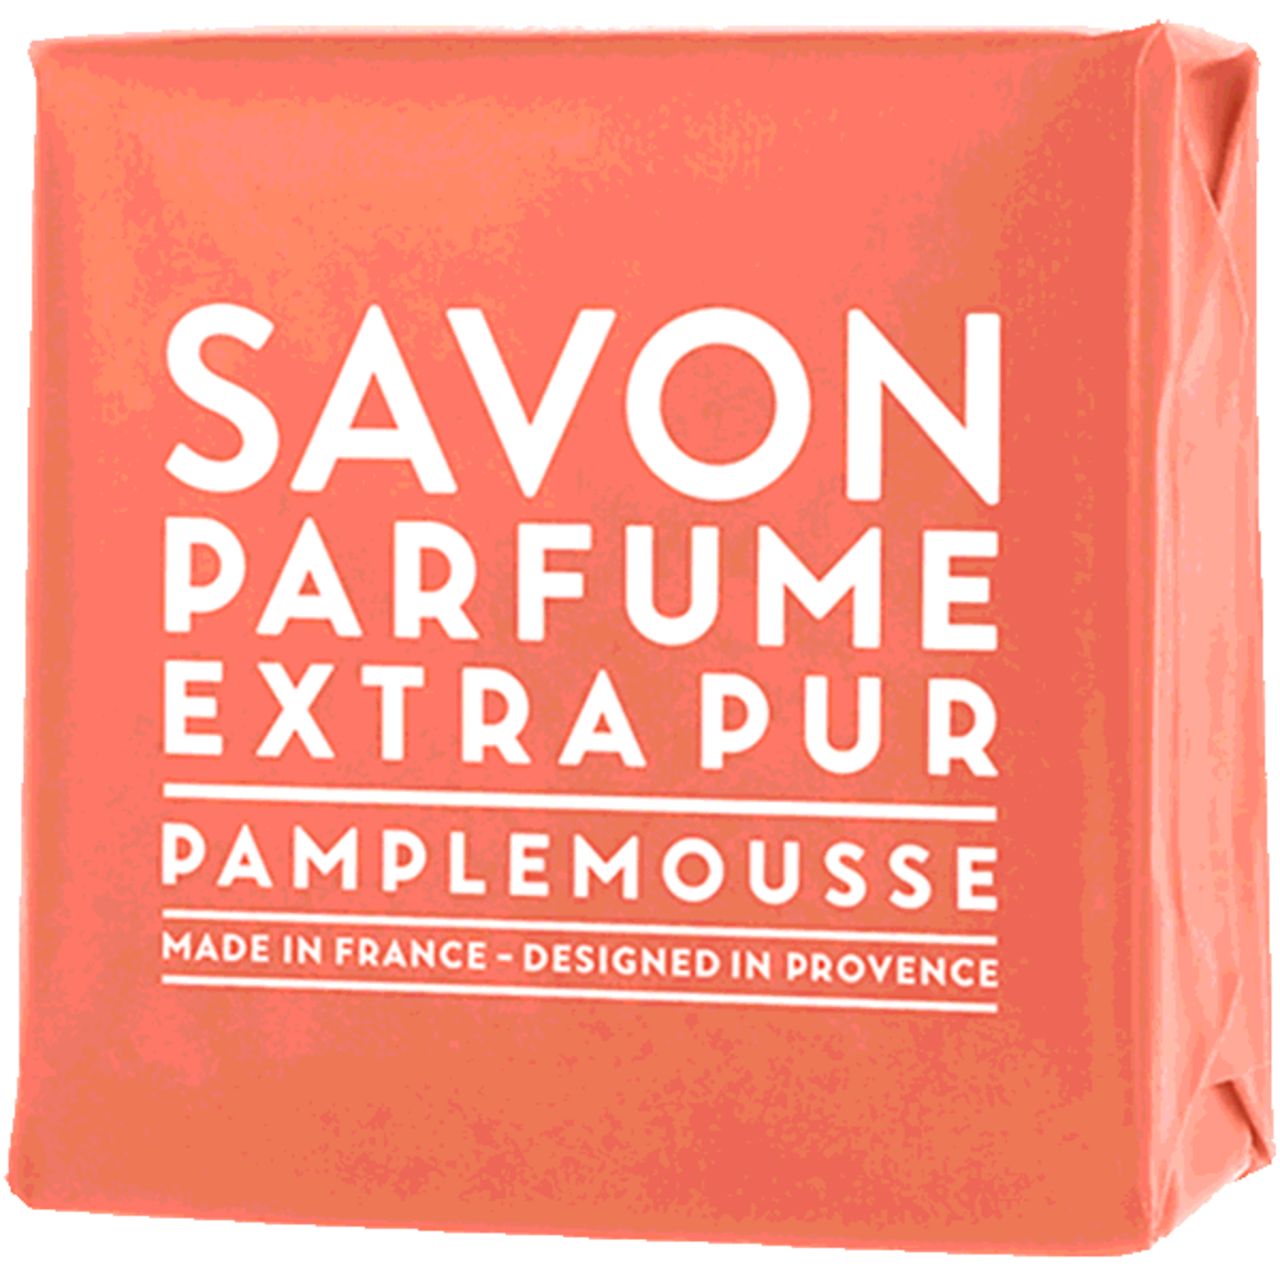 Compagnie de Provence, Extra Pur Liquid Marseille Soap Pink Grapefruit